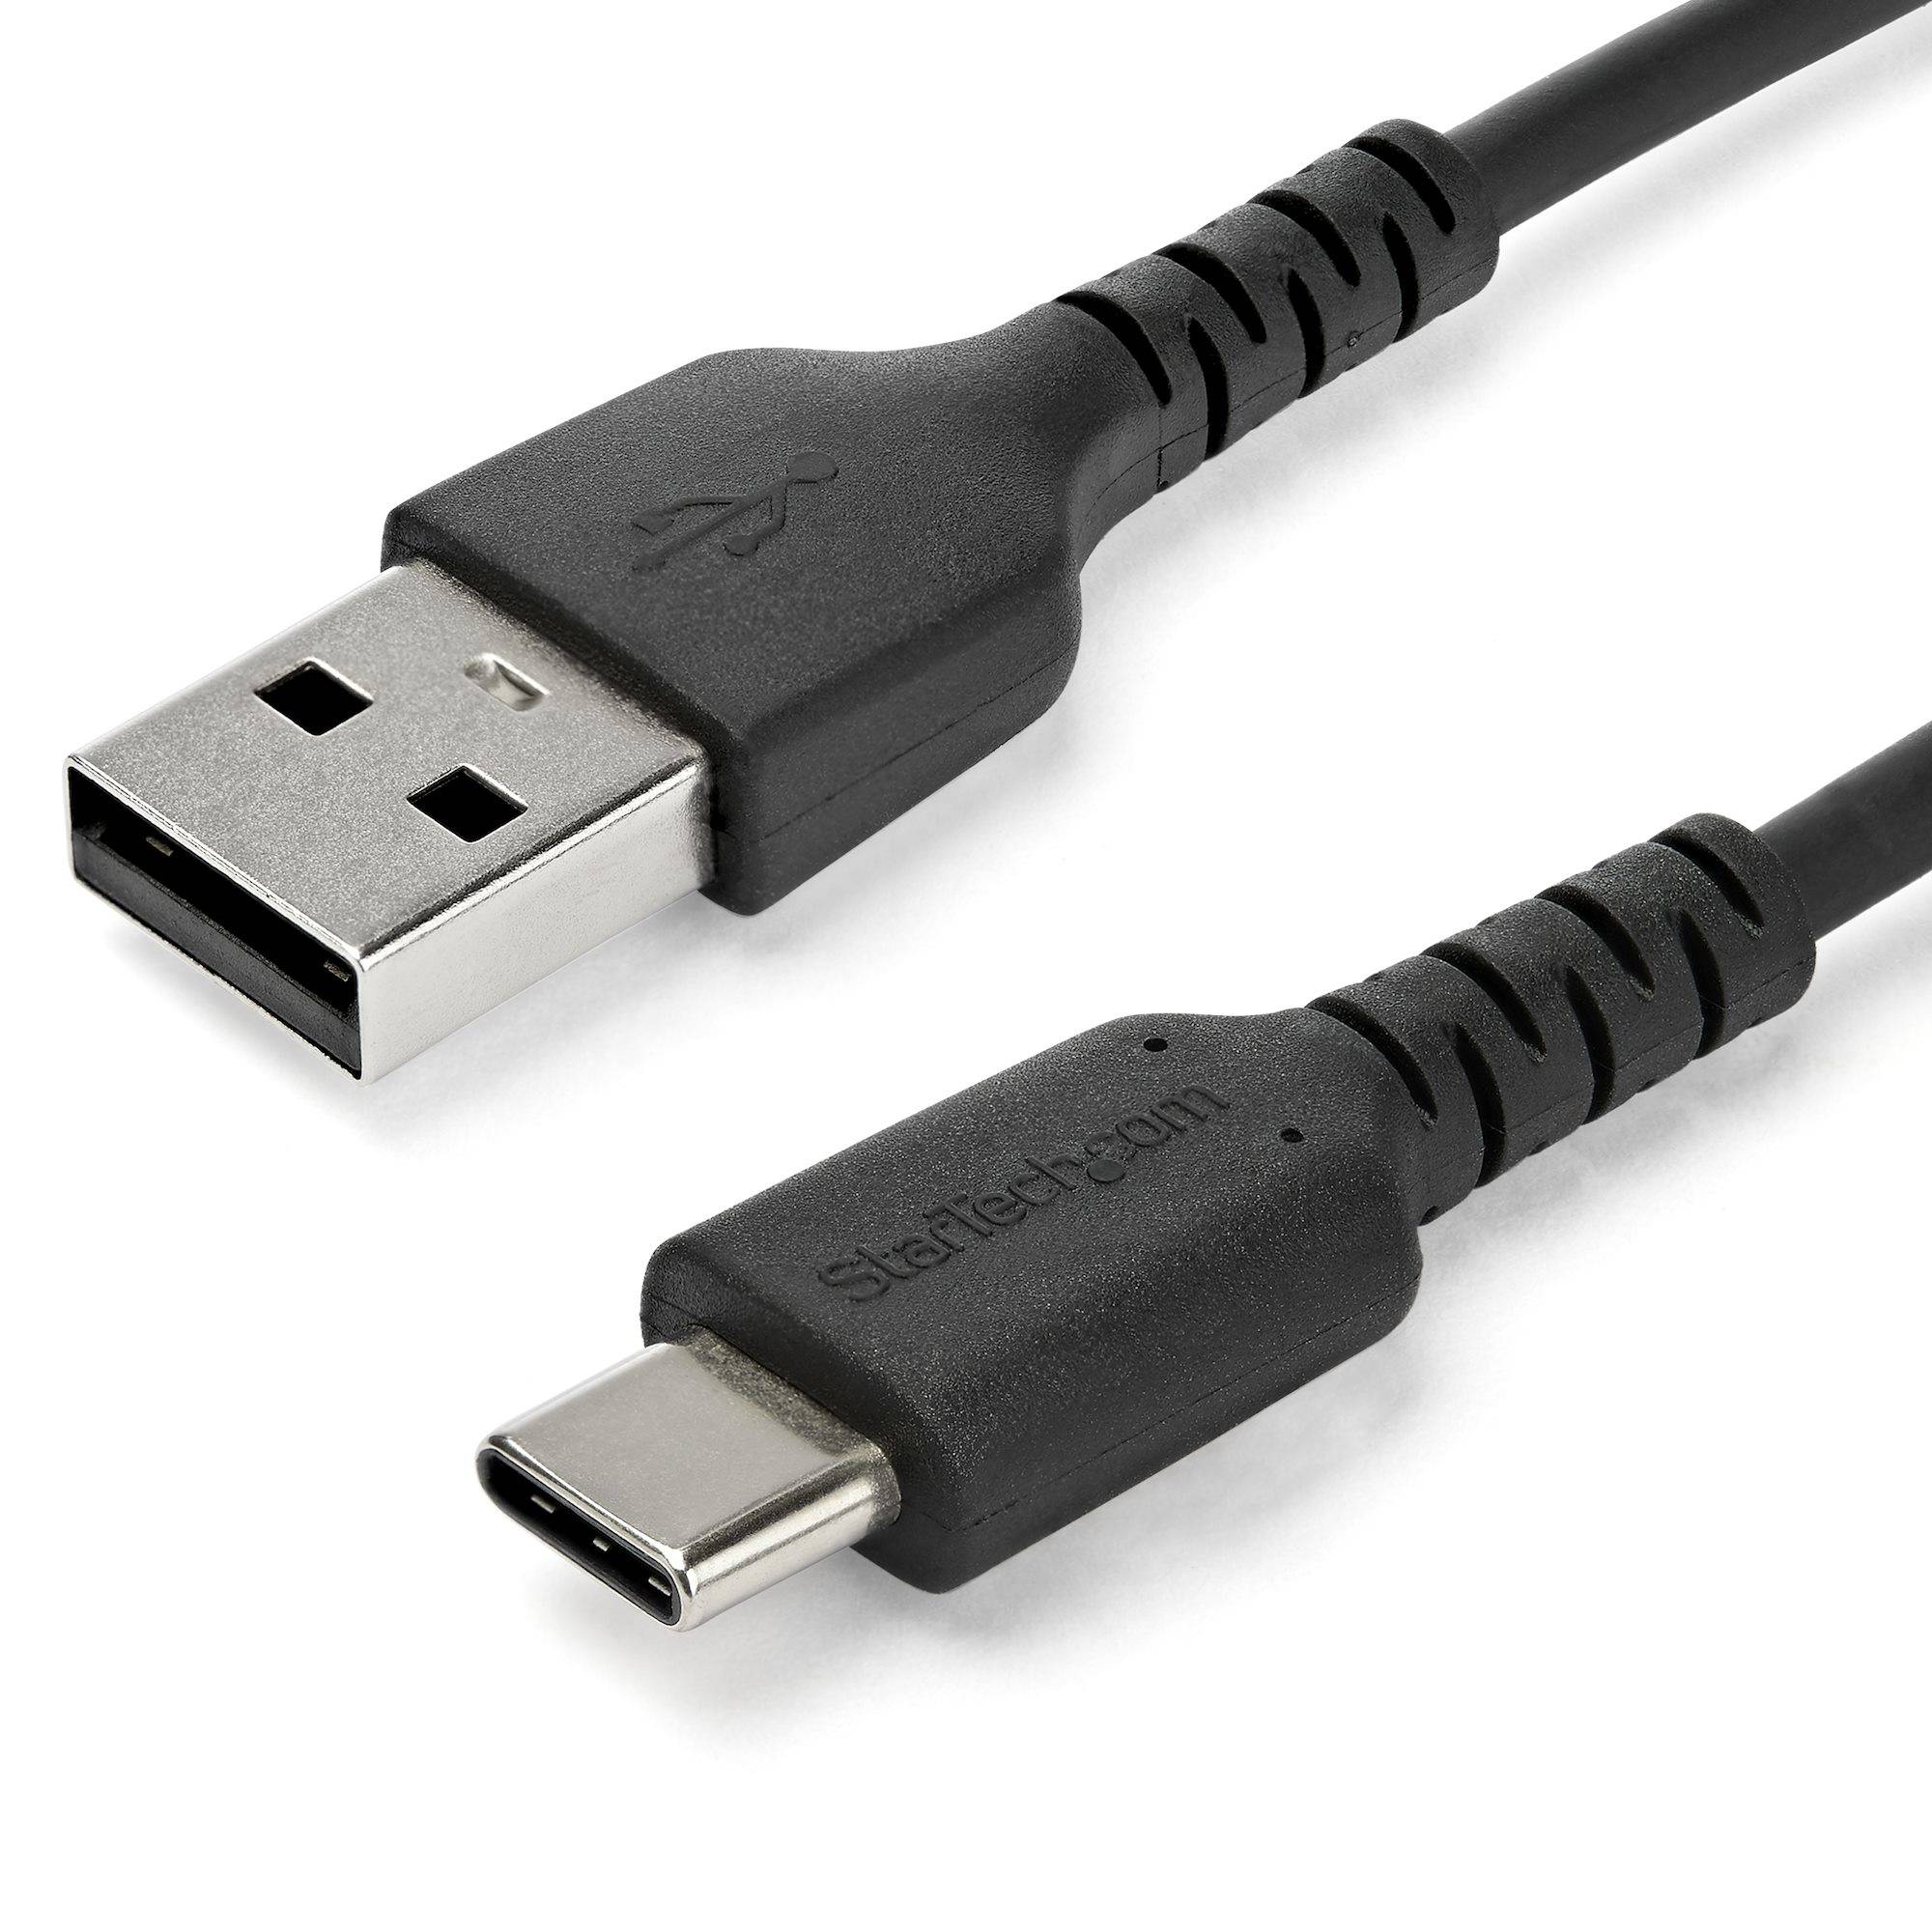 Rca Informatique - image du produit : 2M DURABLE USB 2.0 TO USB C CABLE BLACK ARAMID FIBER